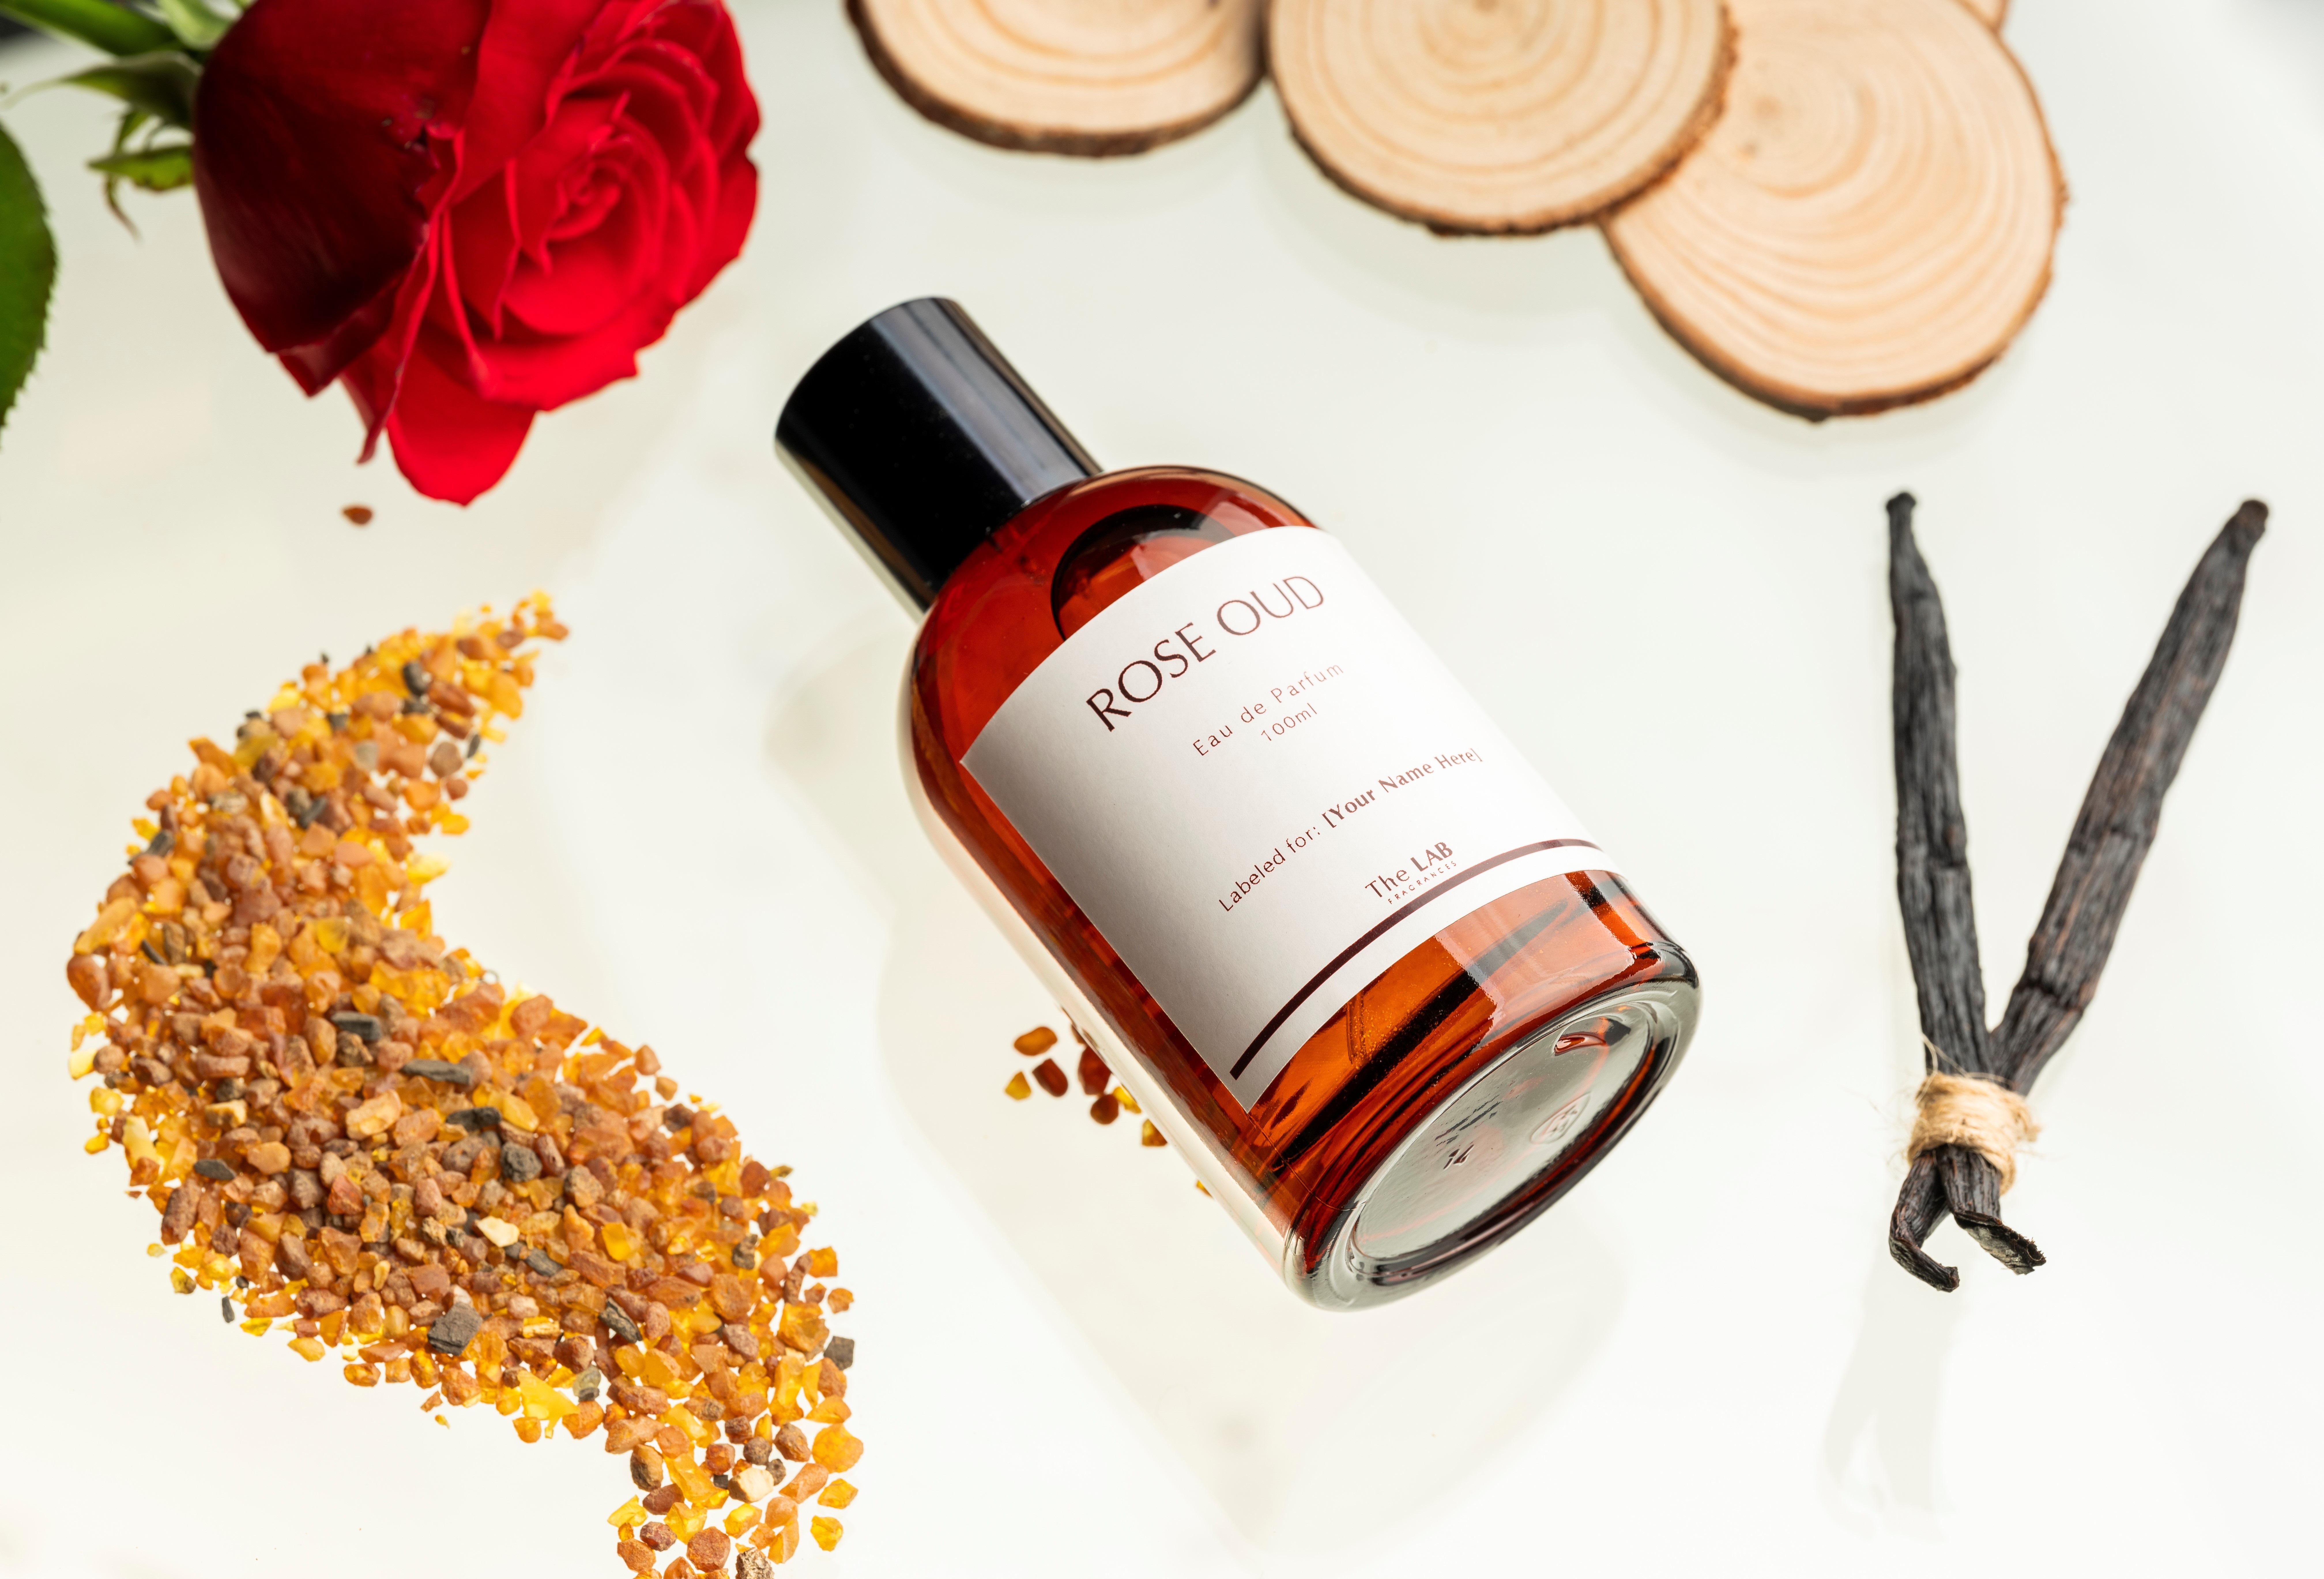 The LAB Fragrances — Rose Oud Fine Perfume